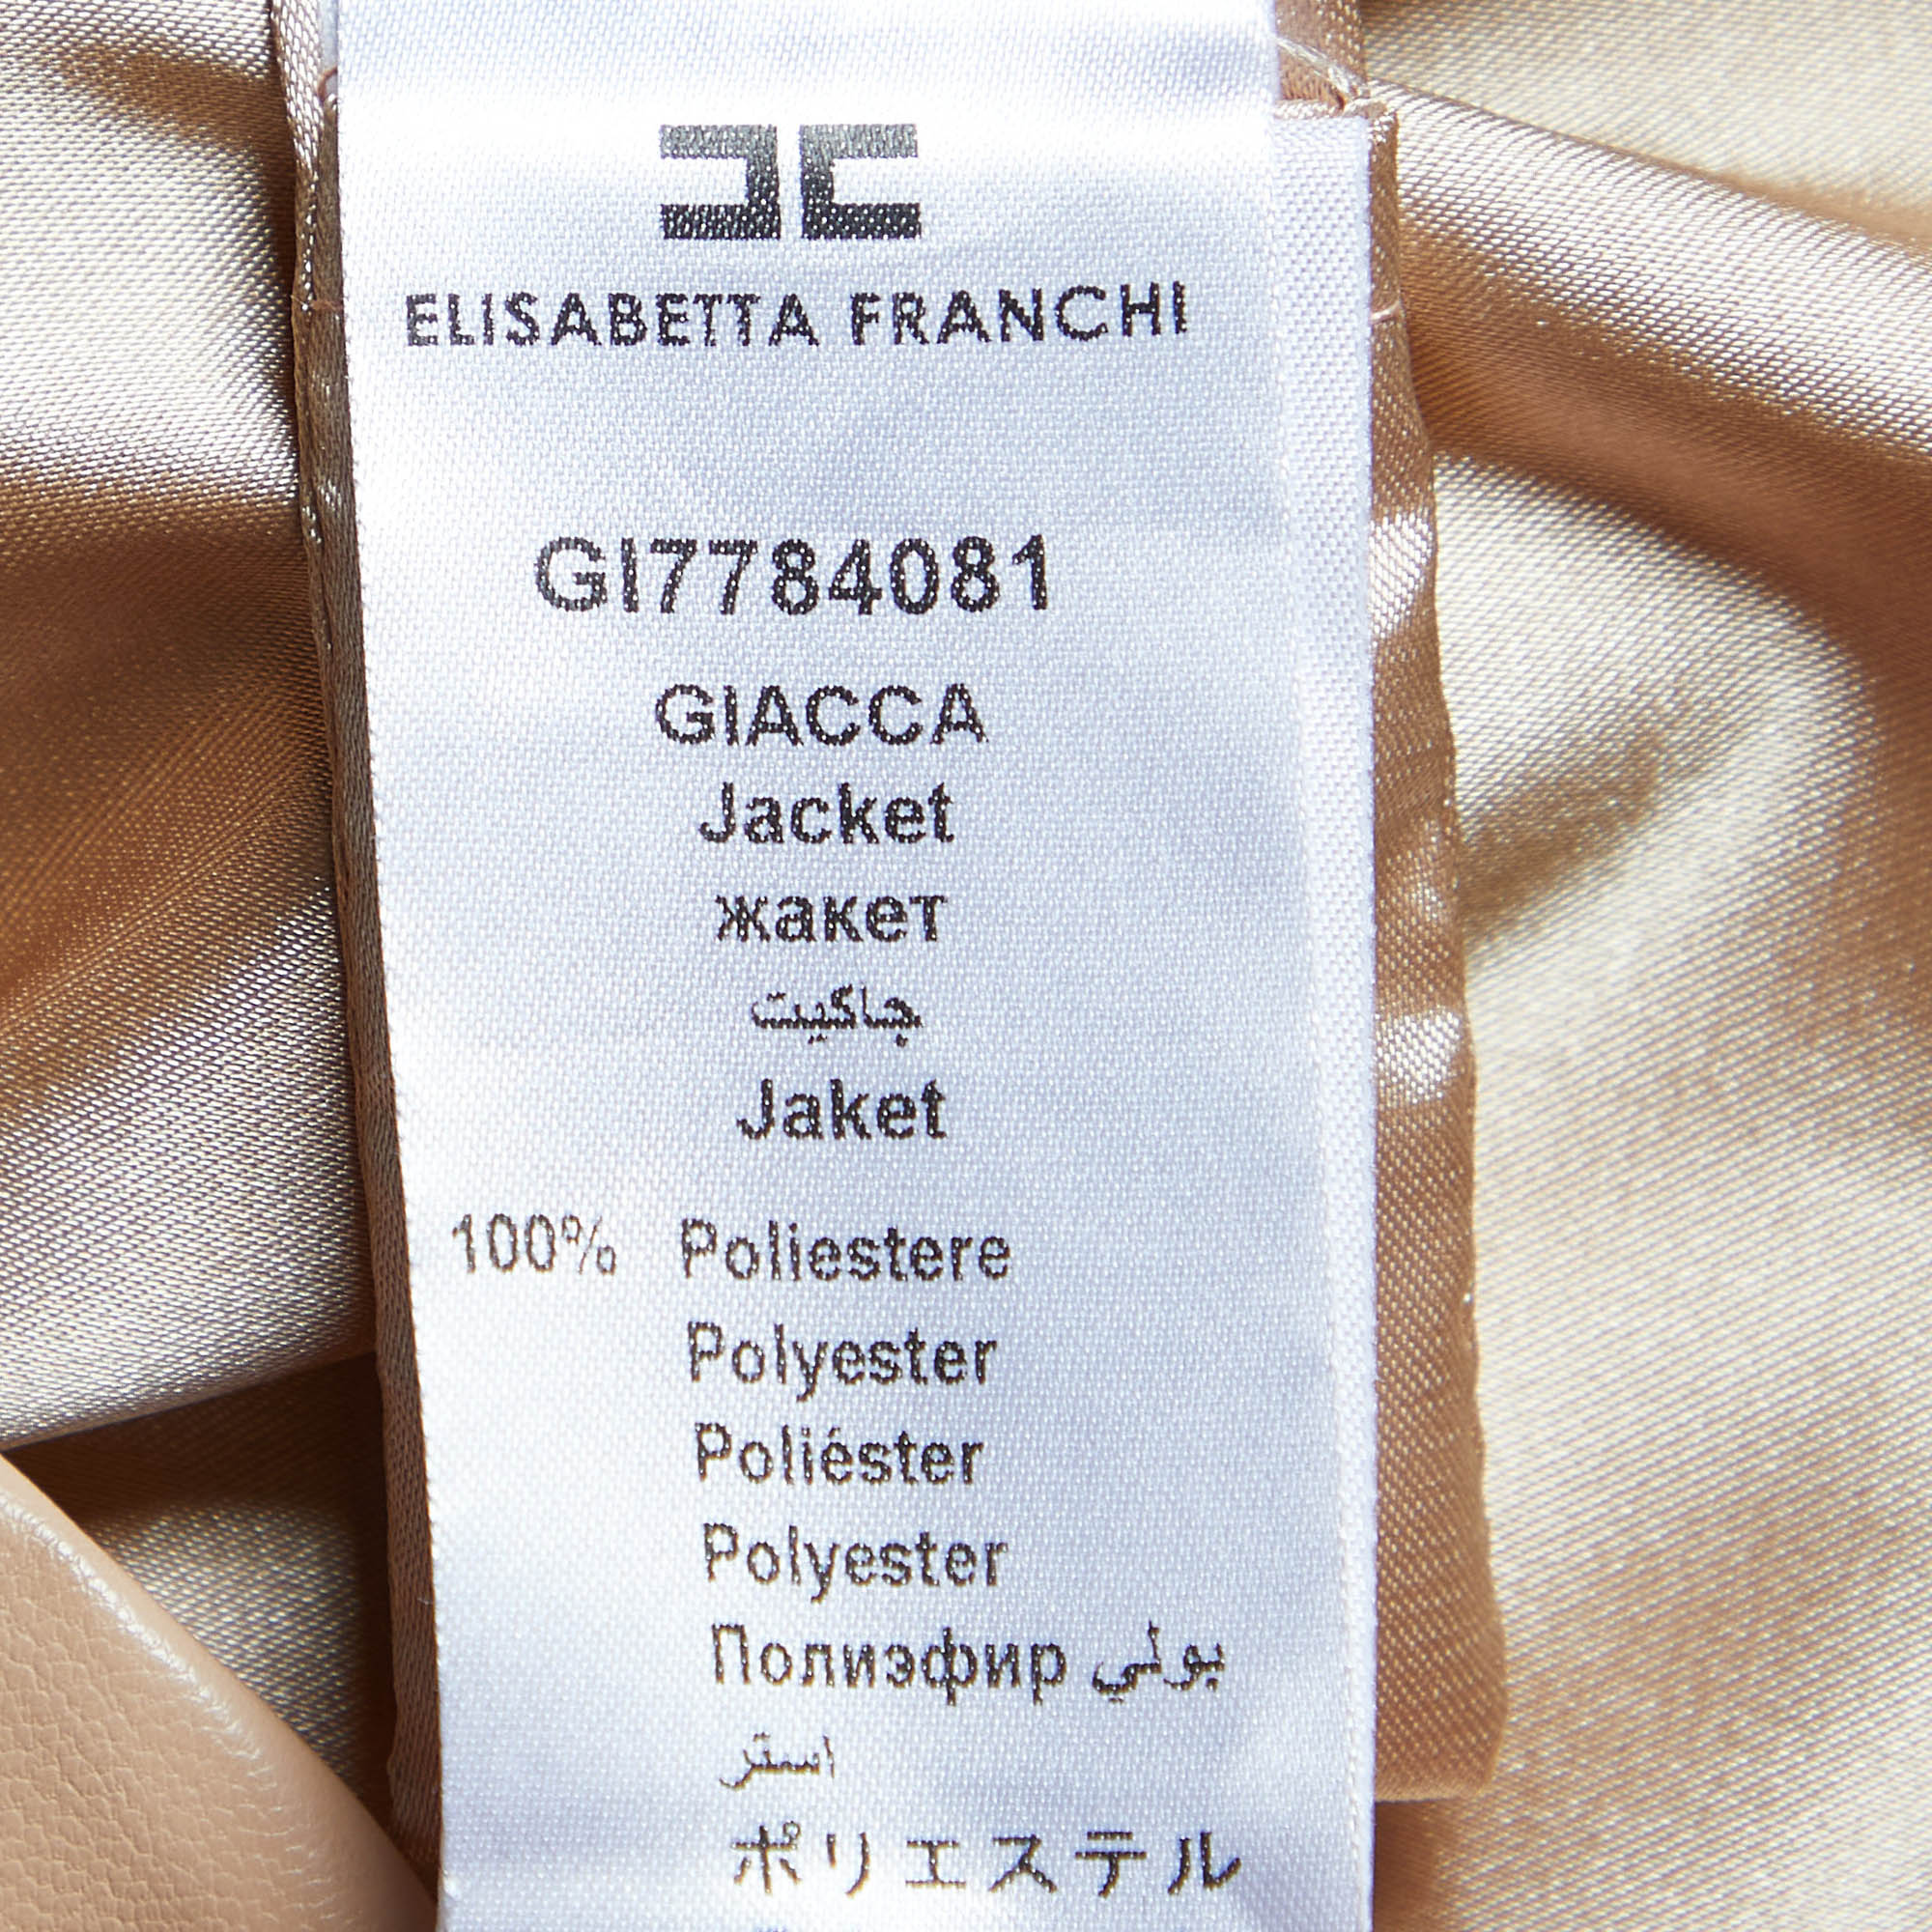 Elisabetta Franchi Beige Faux Leather Belt Detail Jacket L